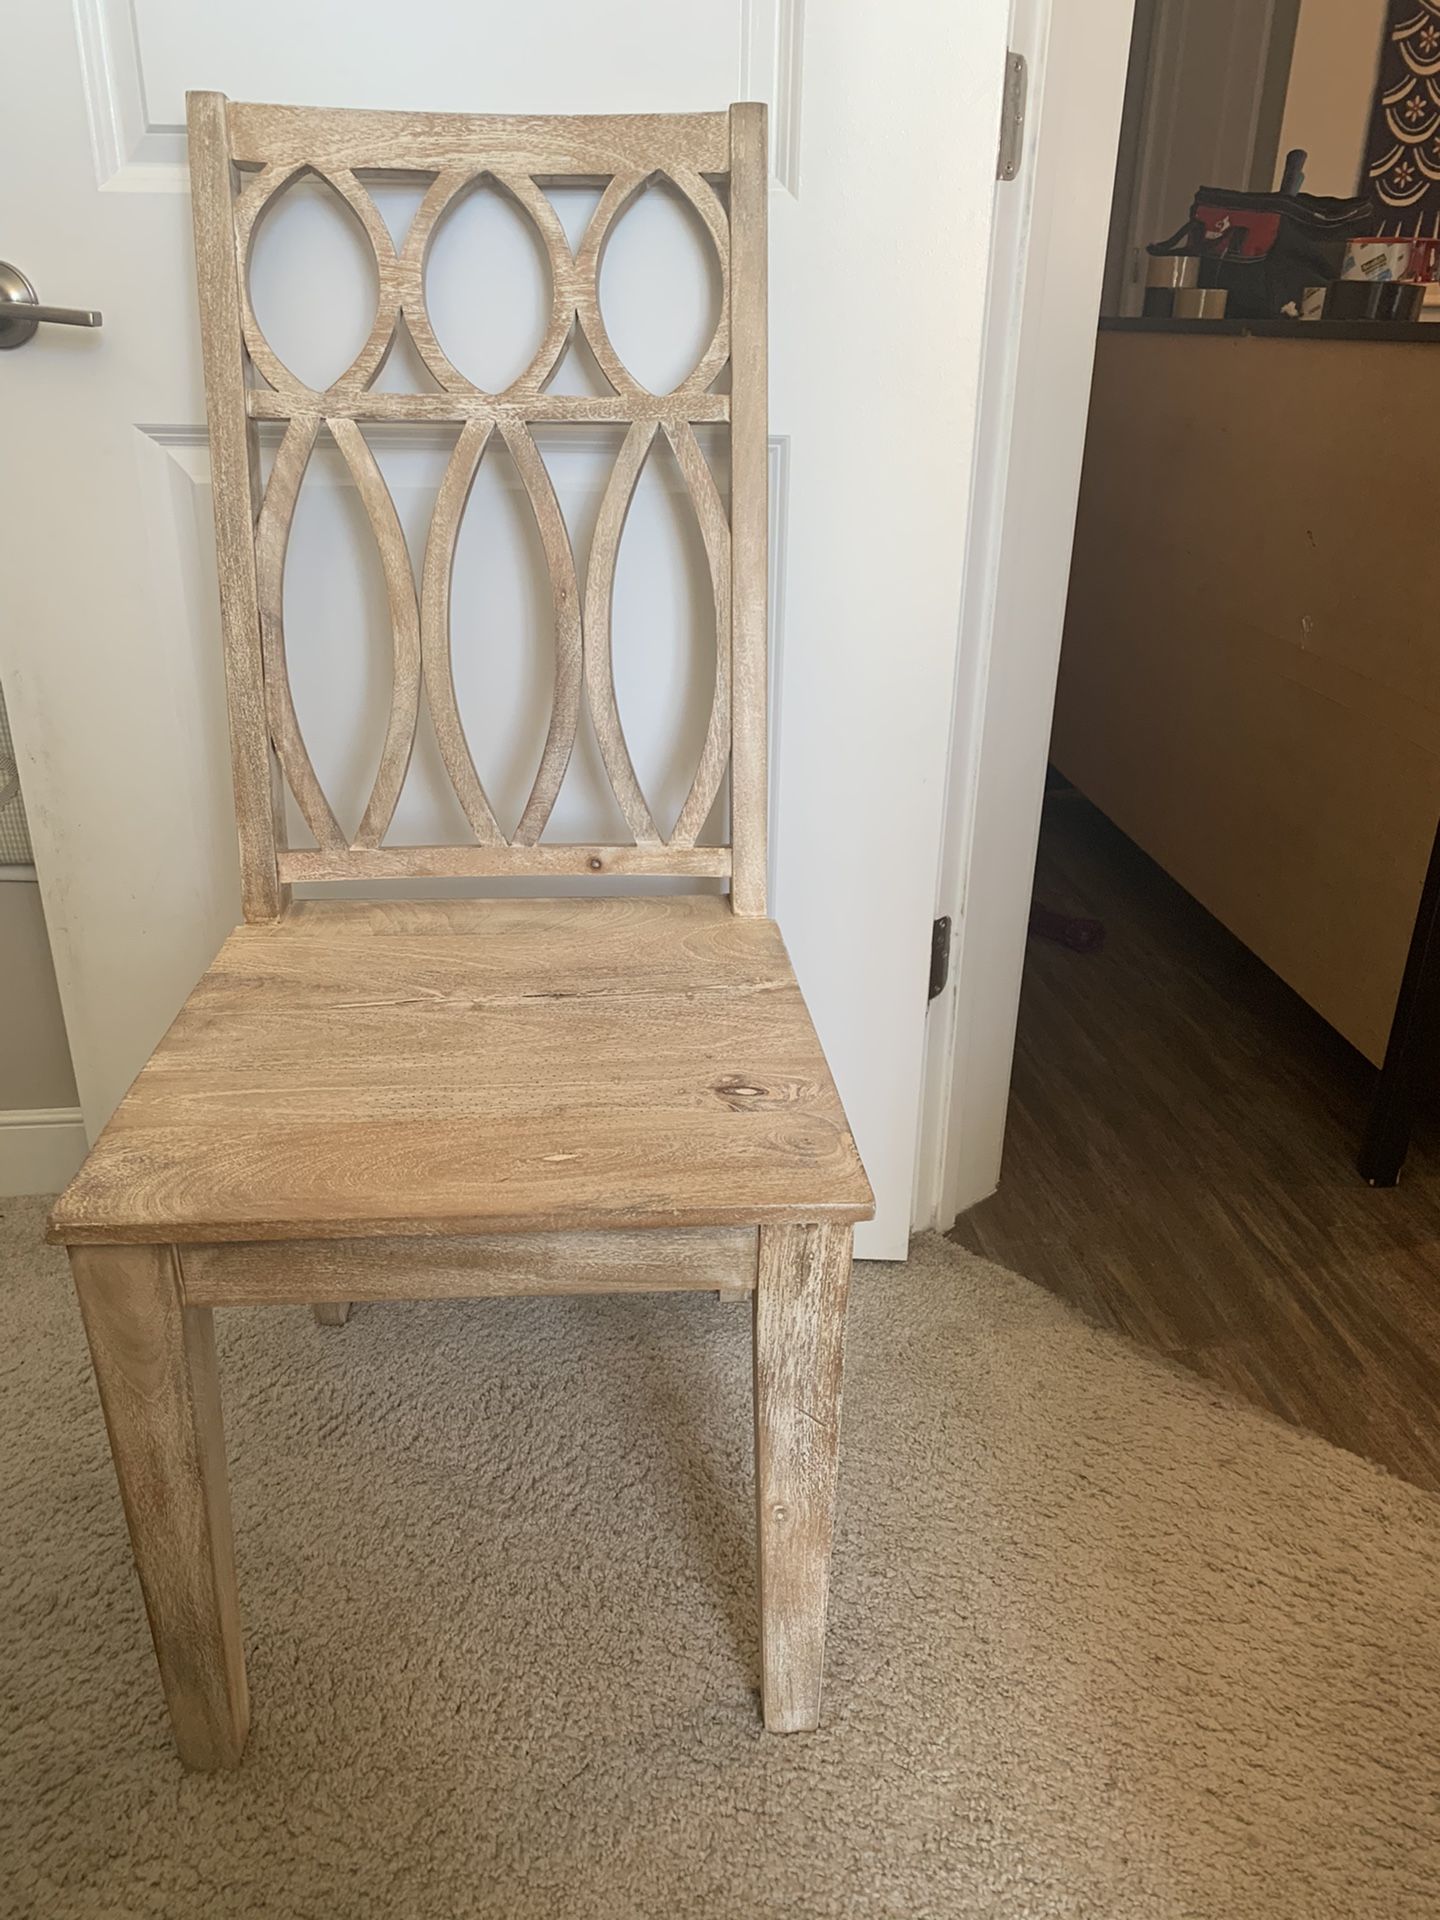 Wooden desk chair